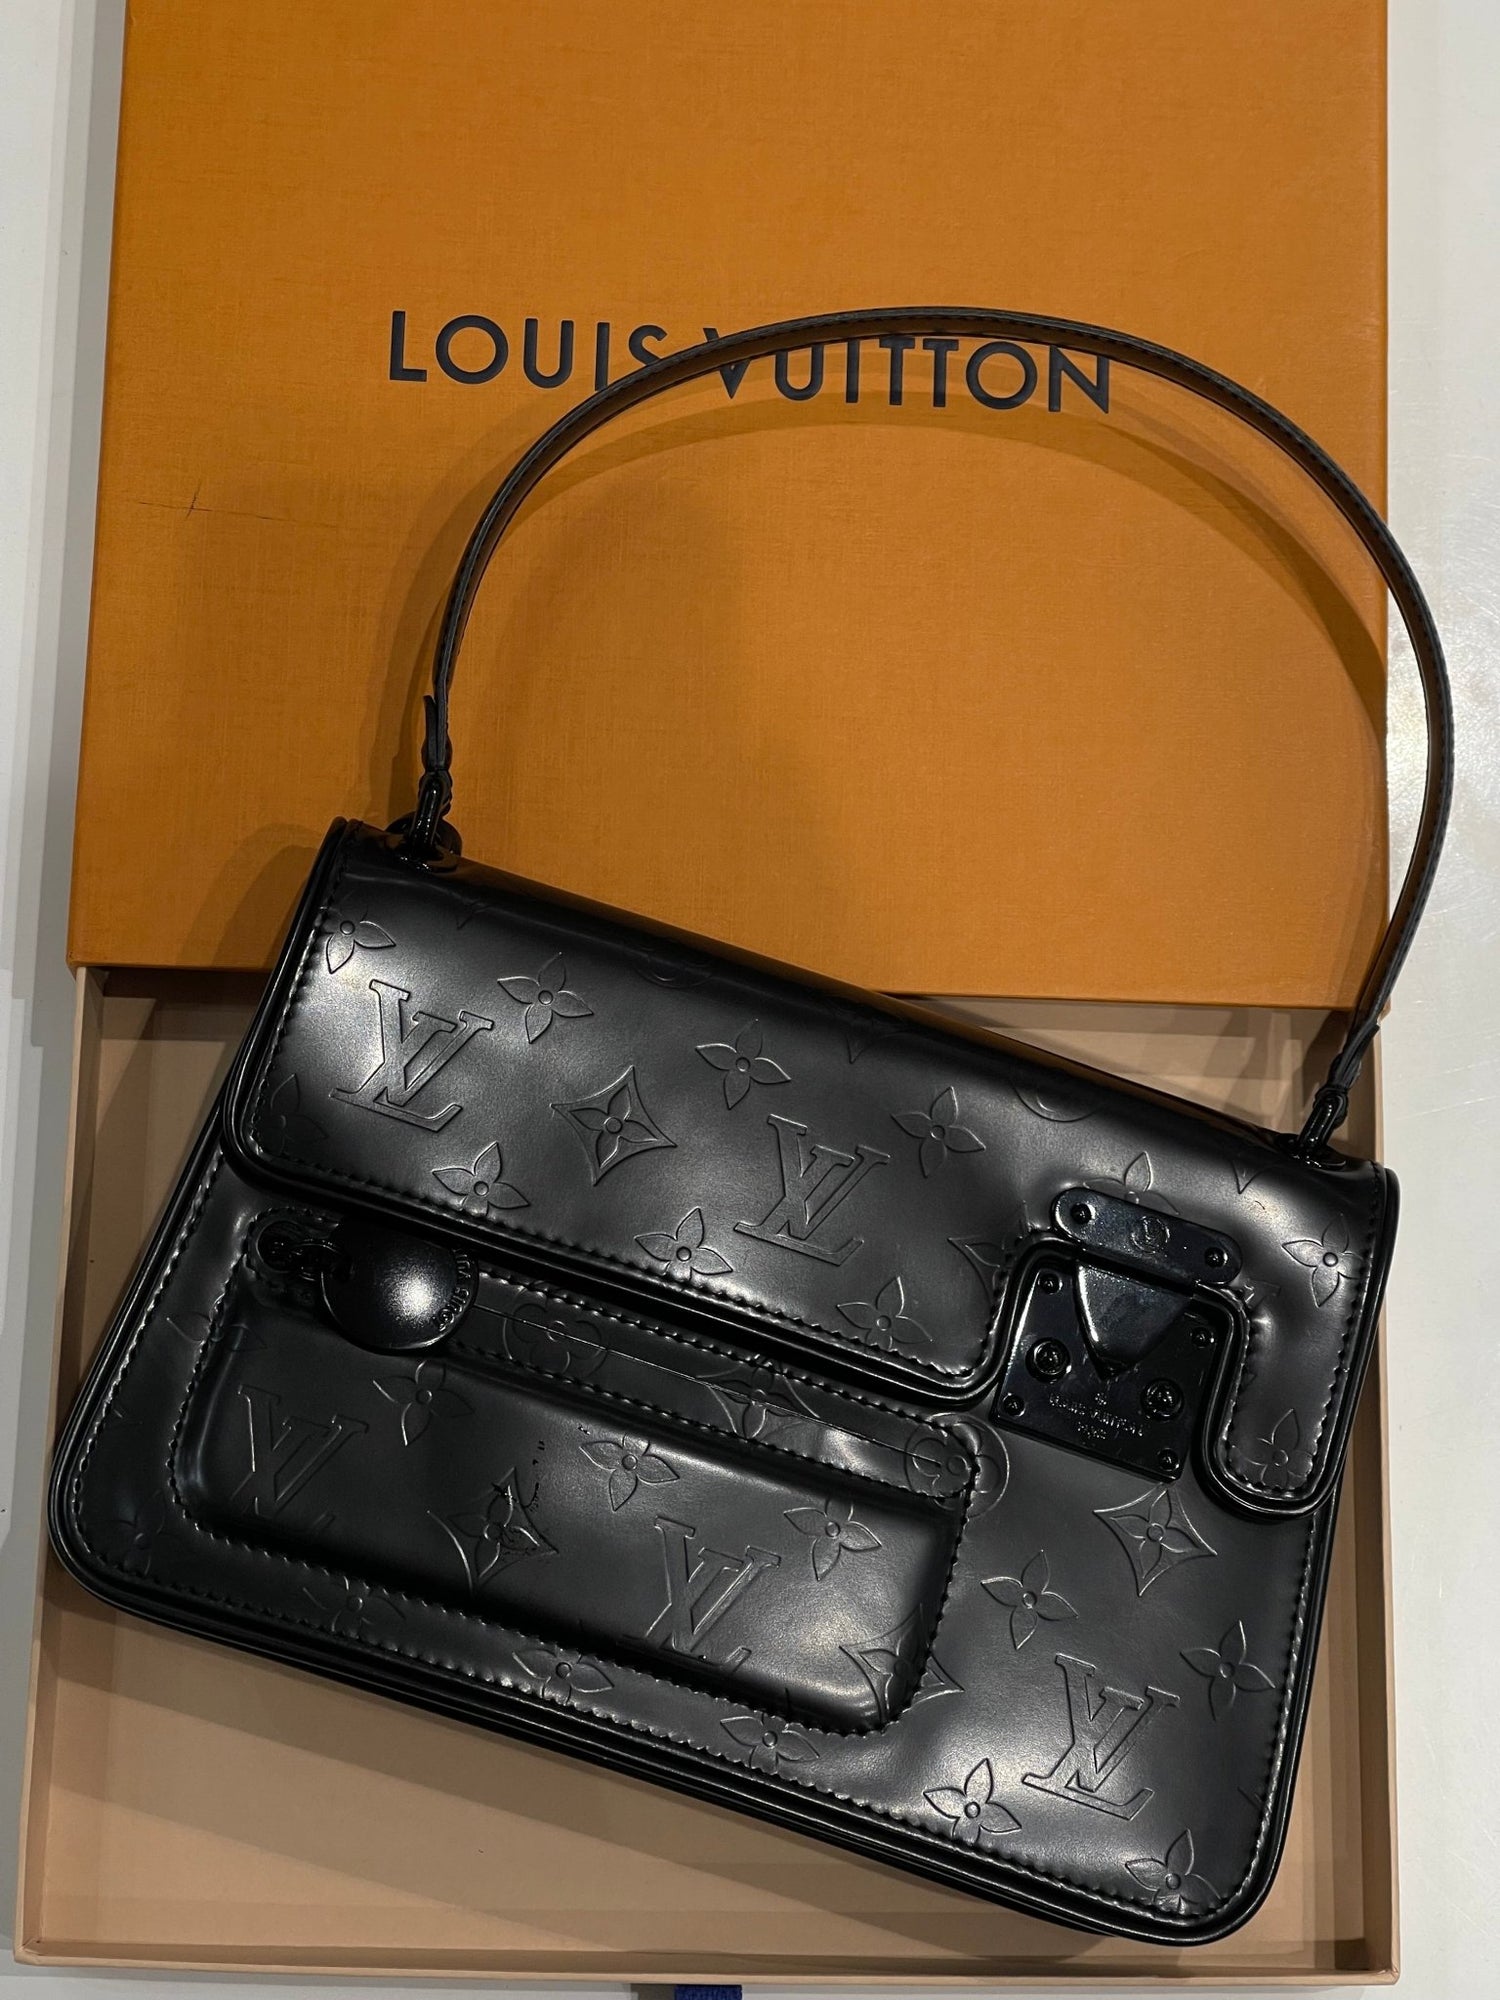 Louis Vuitton - Sac Op Art Monogramme - Les Folies d&